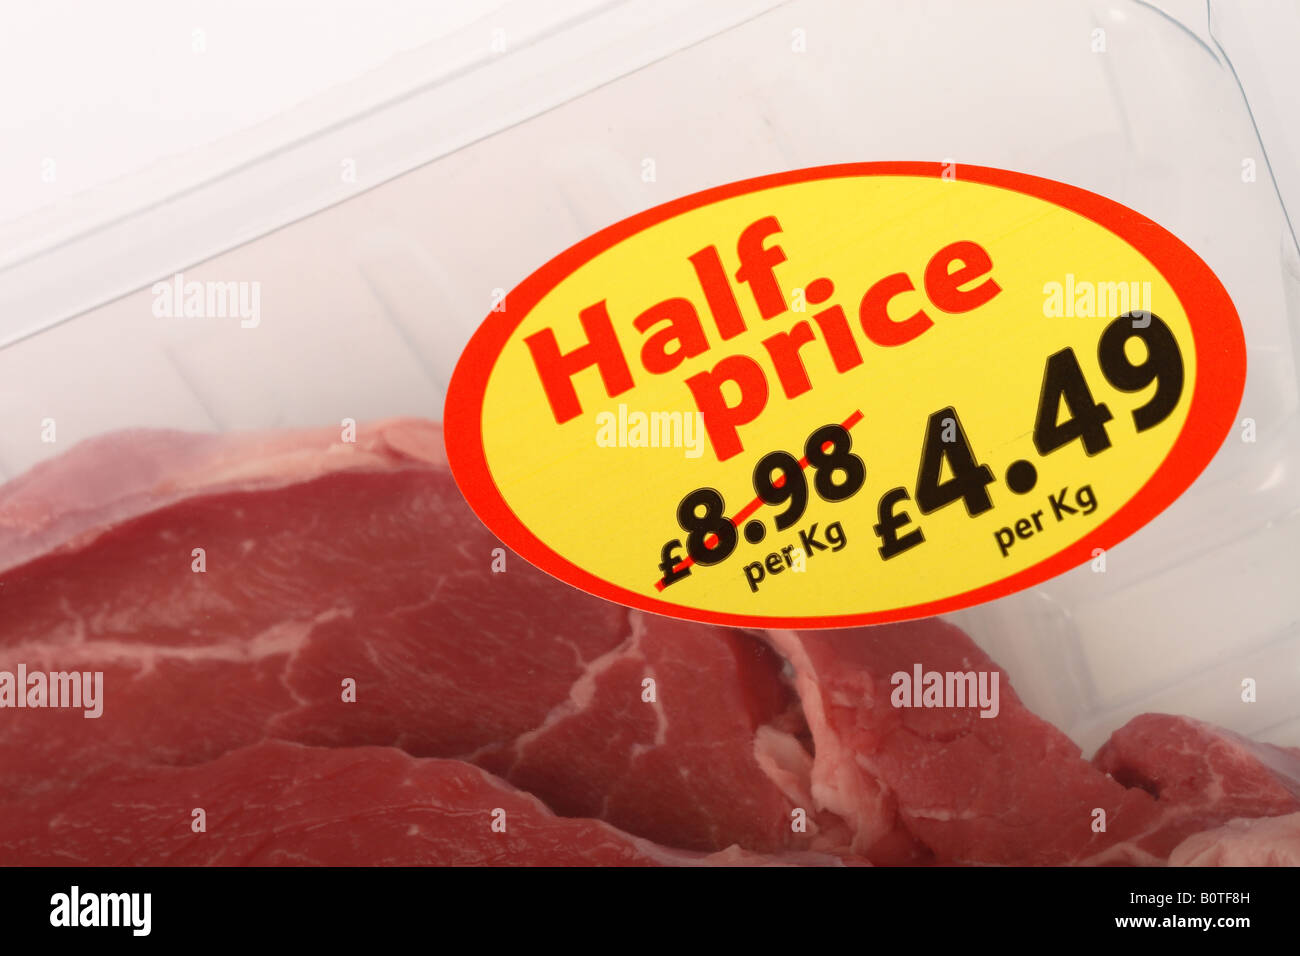 Reduced-price food bargains